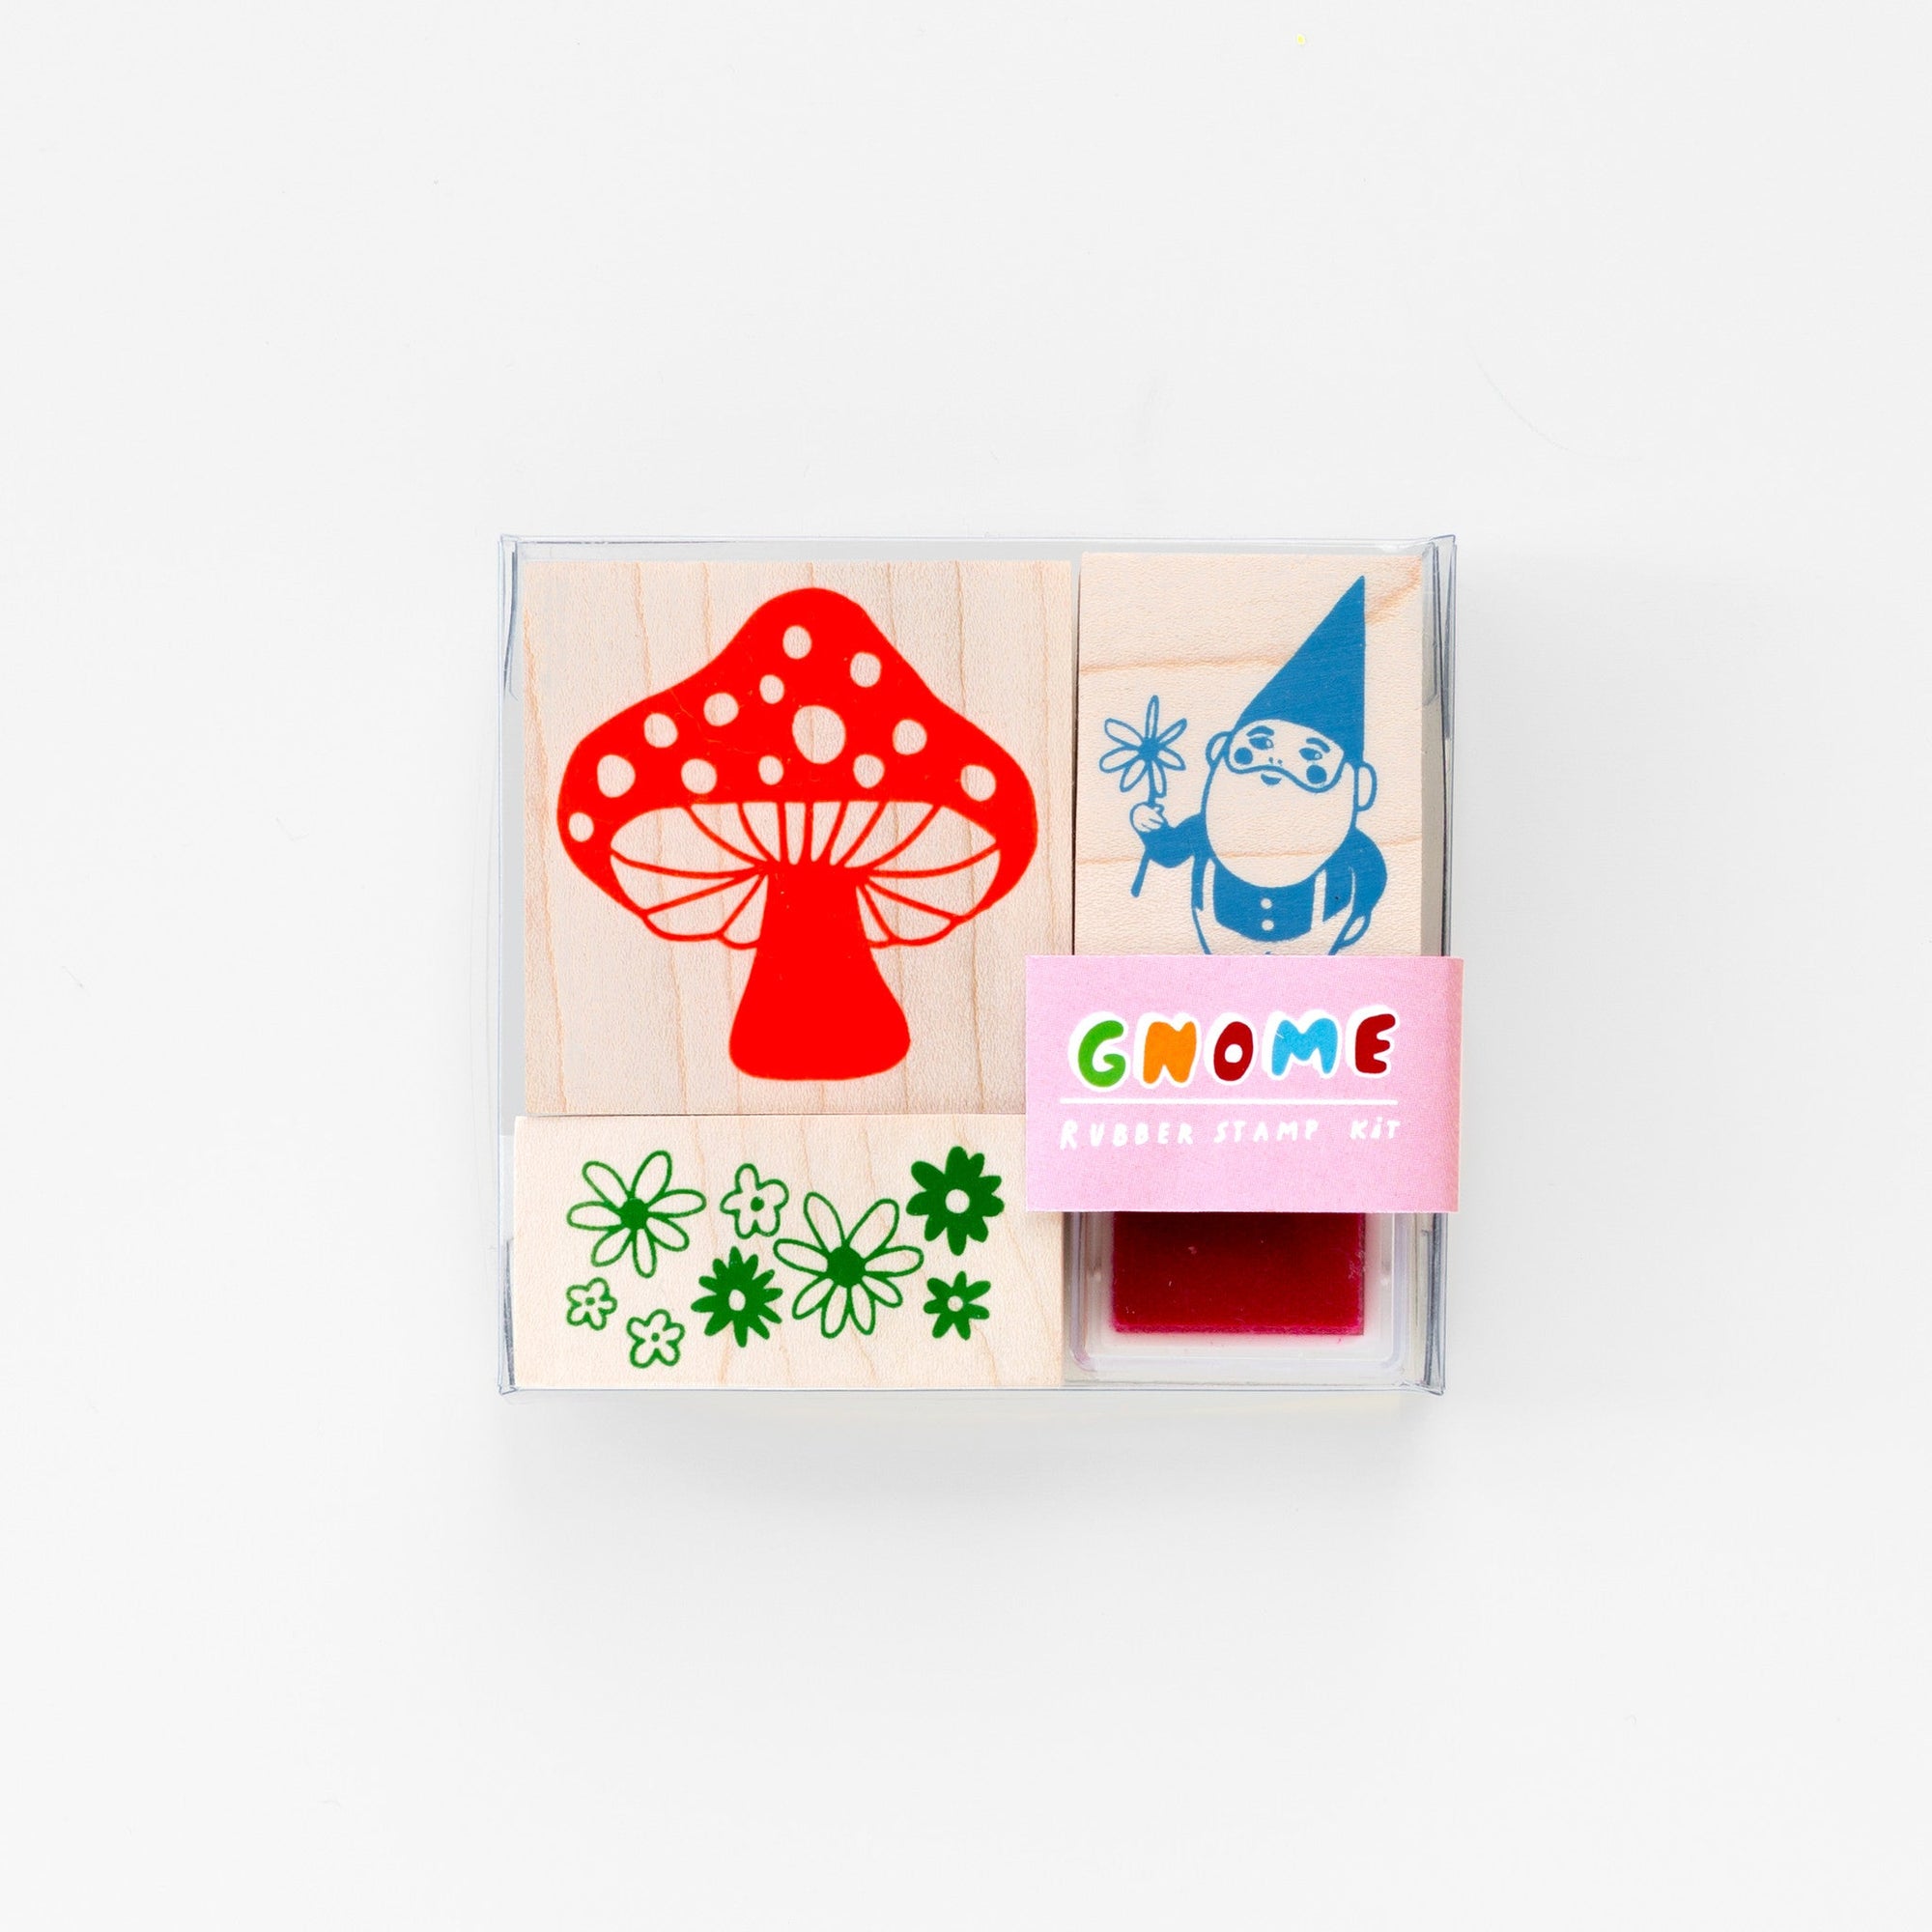 Gnome & Mushroom Small Stamp Kit - Yellow Owl Workshop